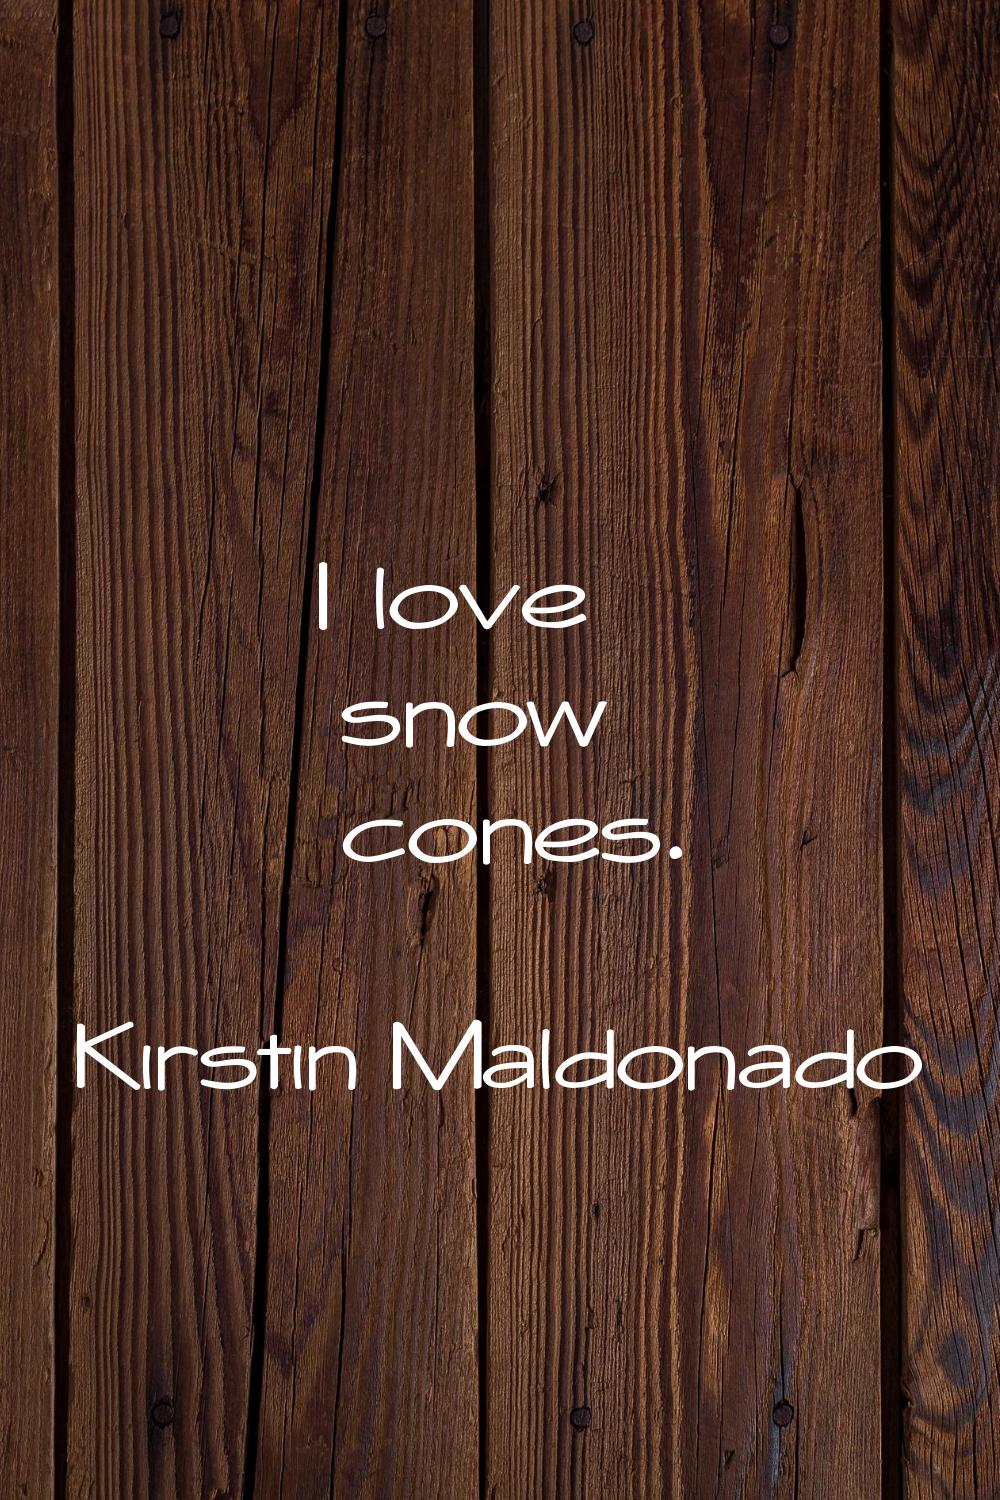 I love snow cones.